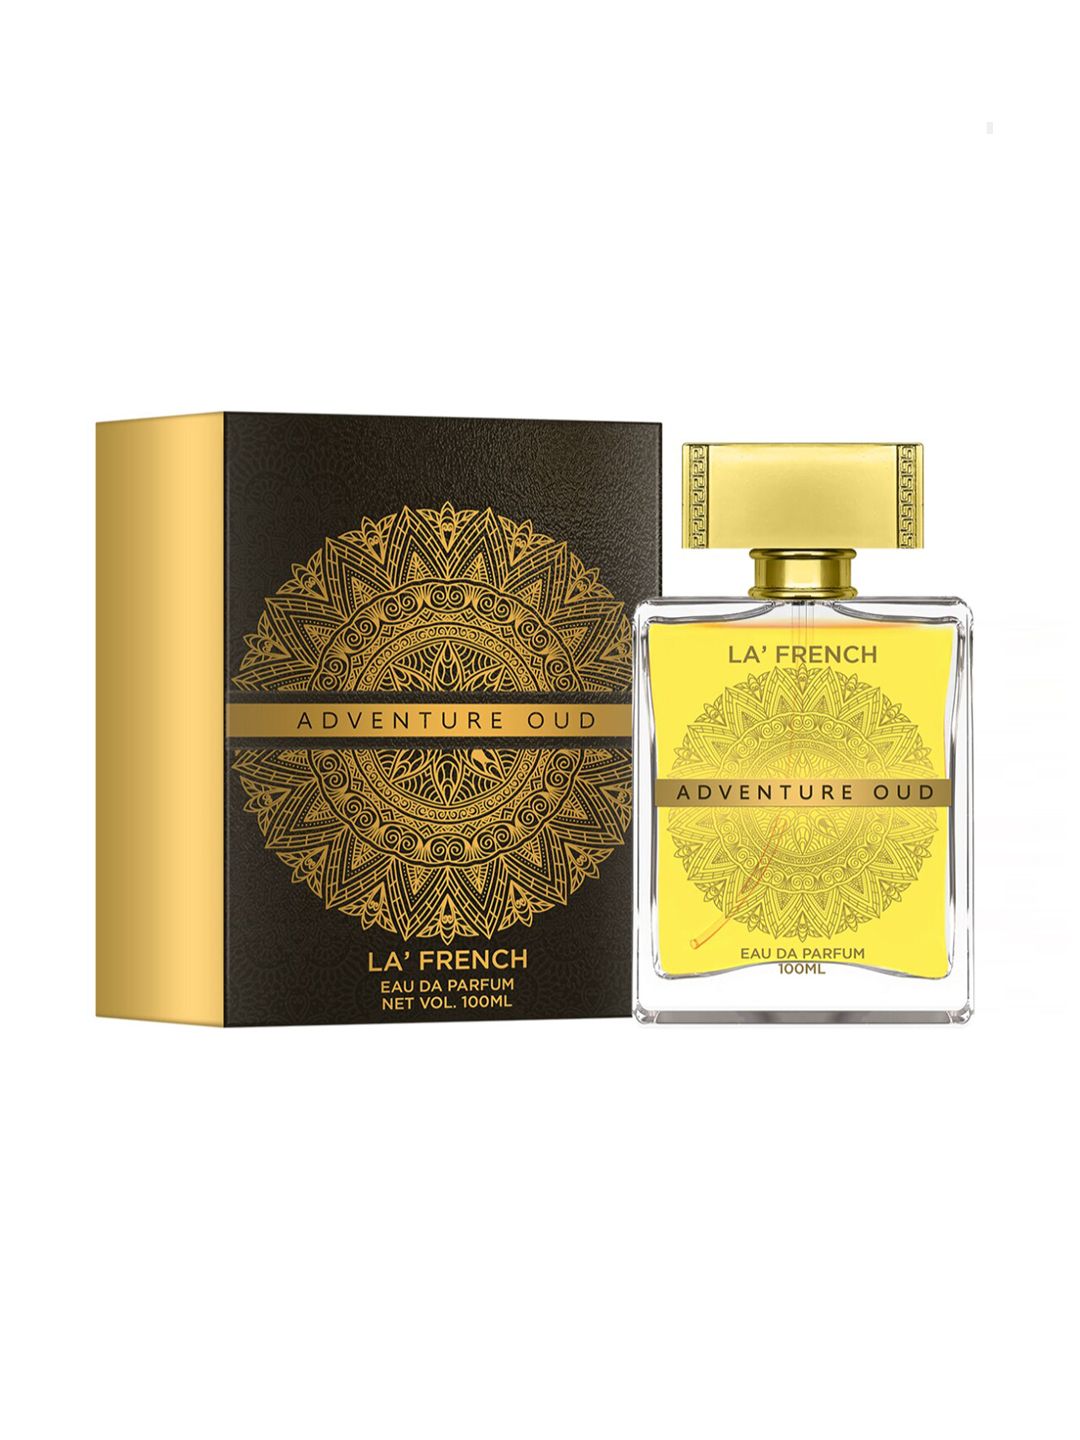 La French Unisex Adventure Oud Eau De Parfum - 100 ml Price in India